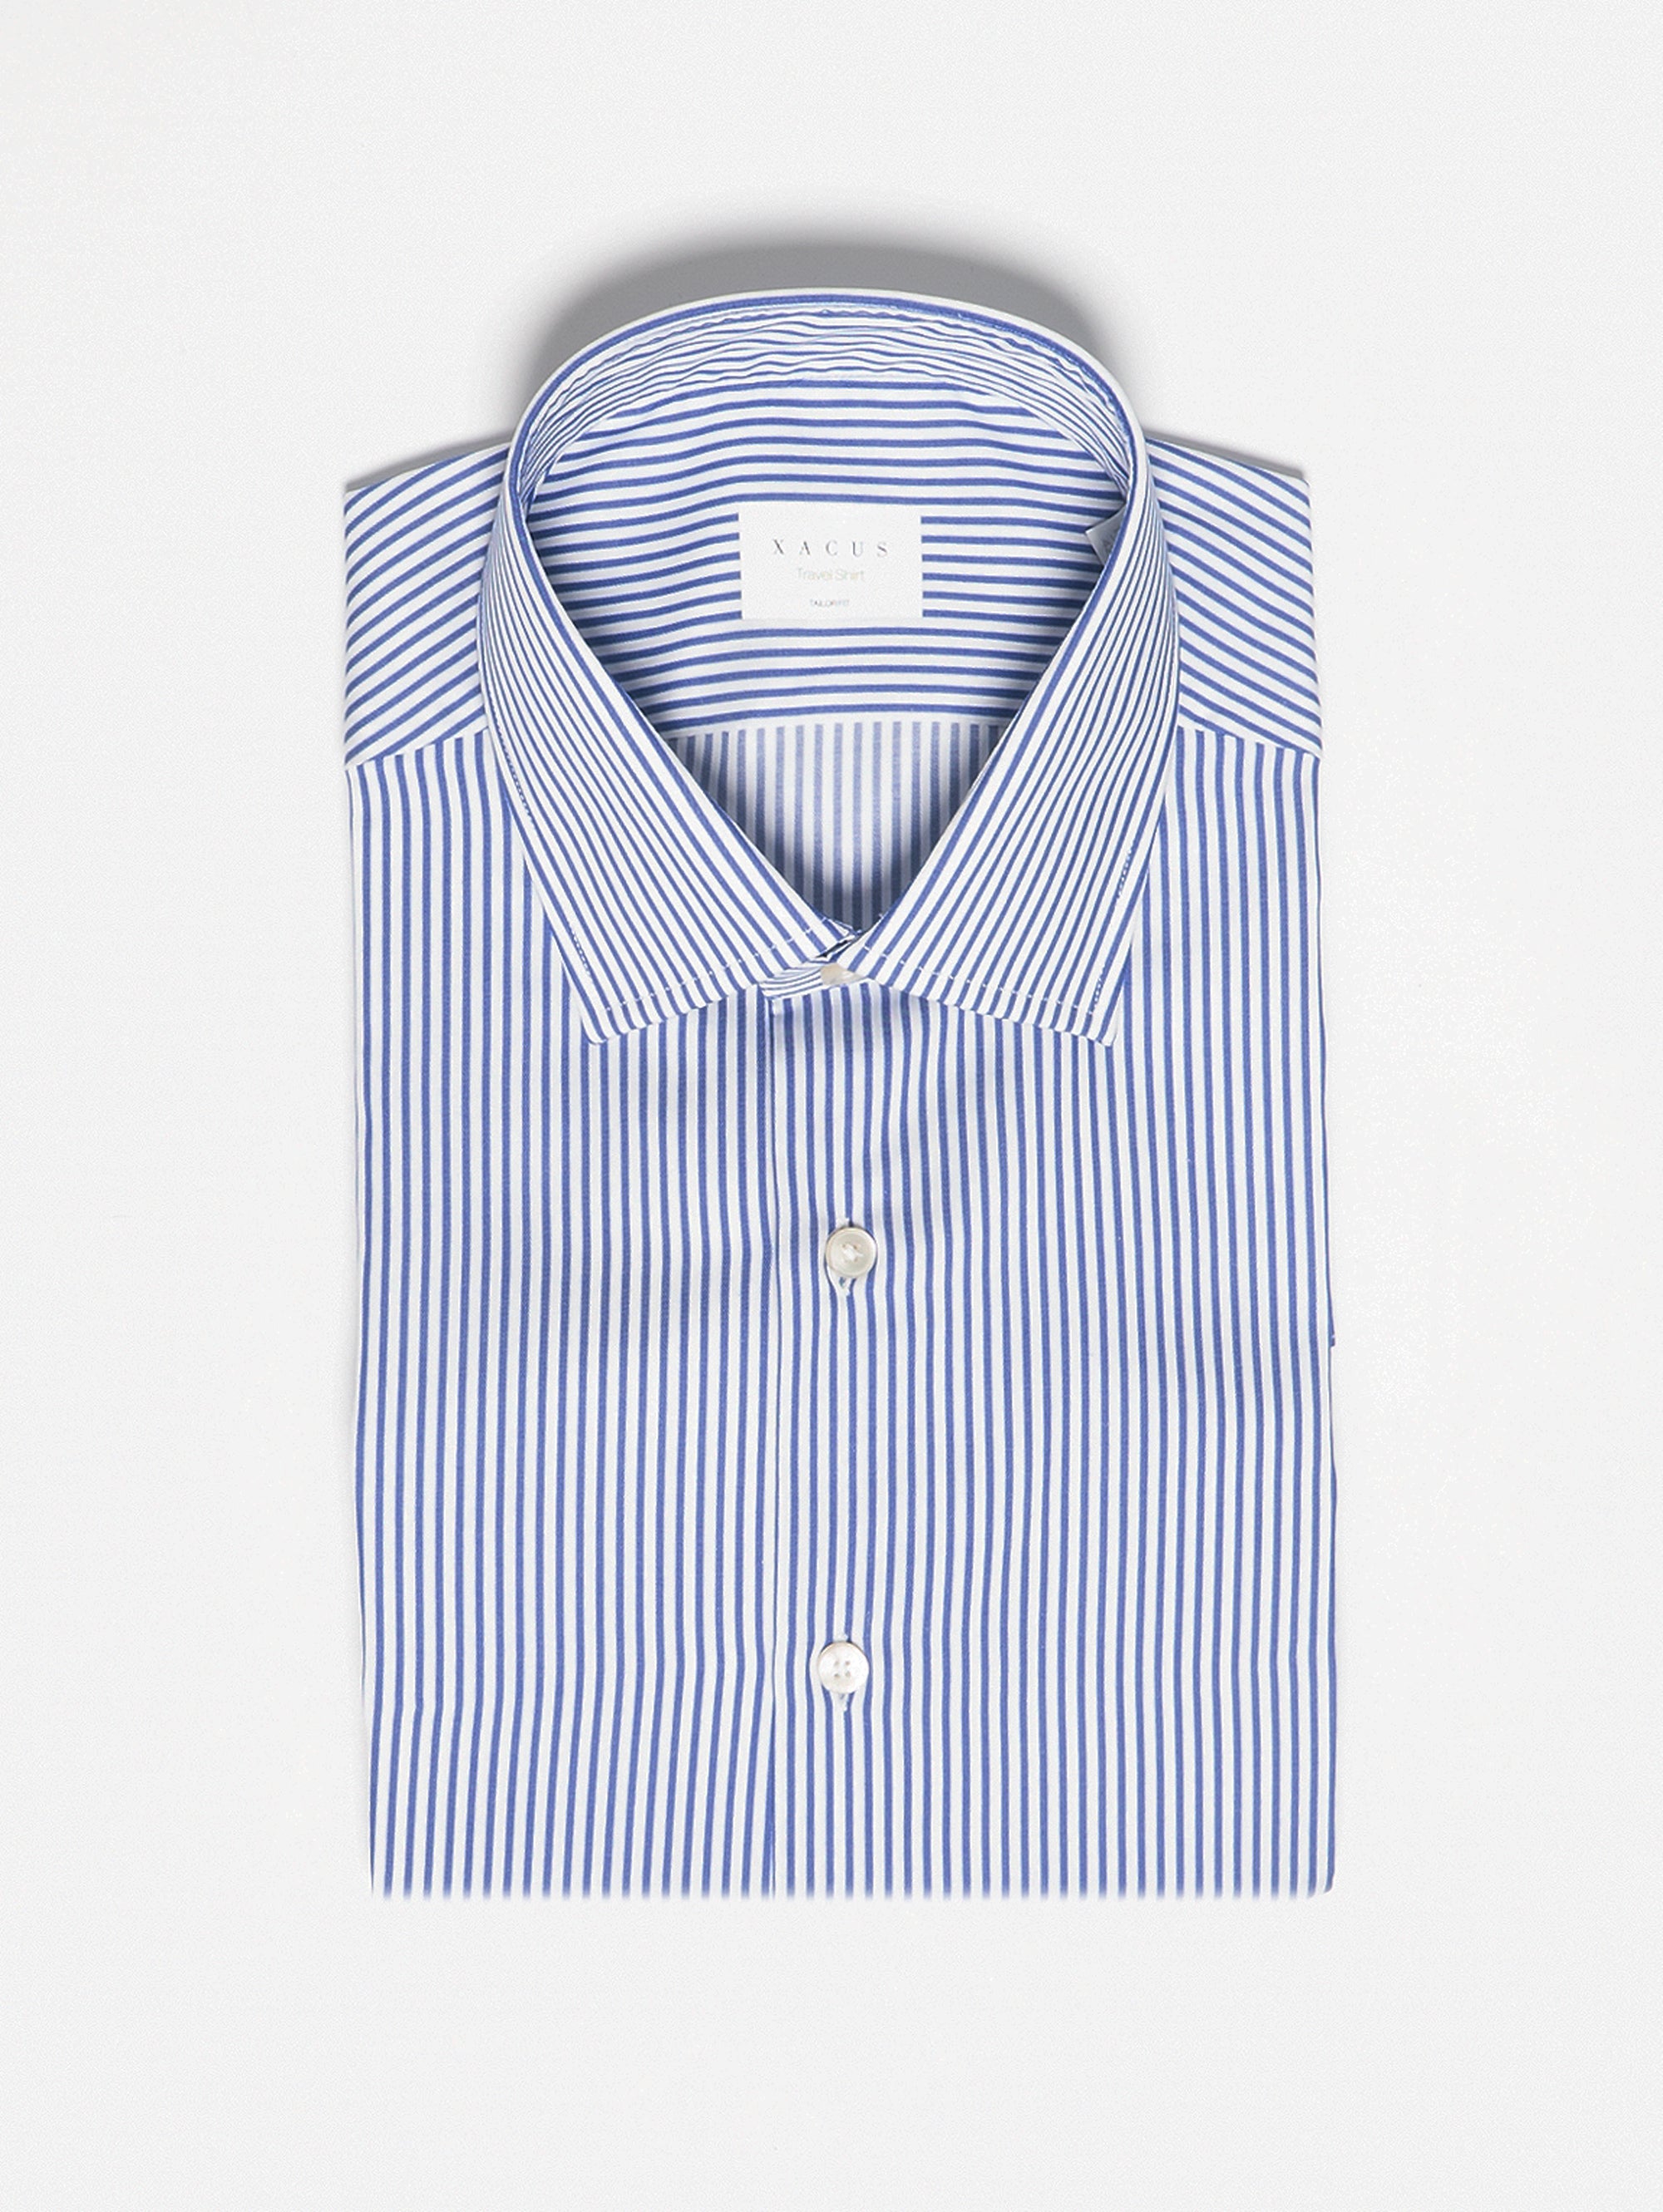 XACUS-Camicia in Cotone No Stiro a Righe Bianco/Blu-TRYME Shop